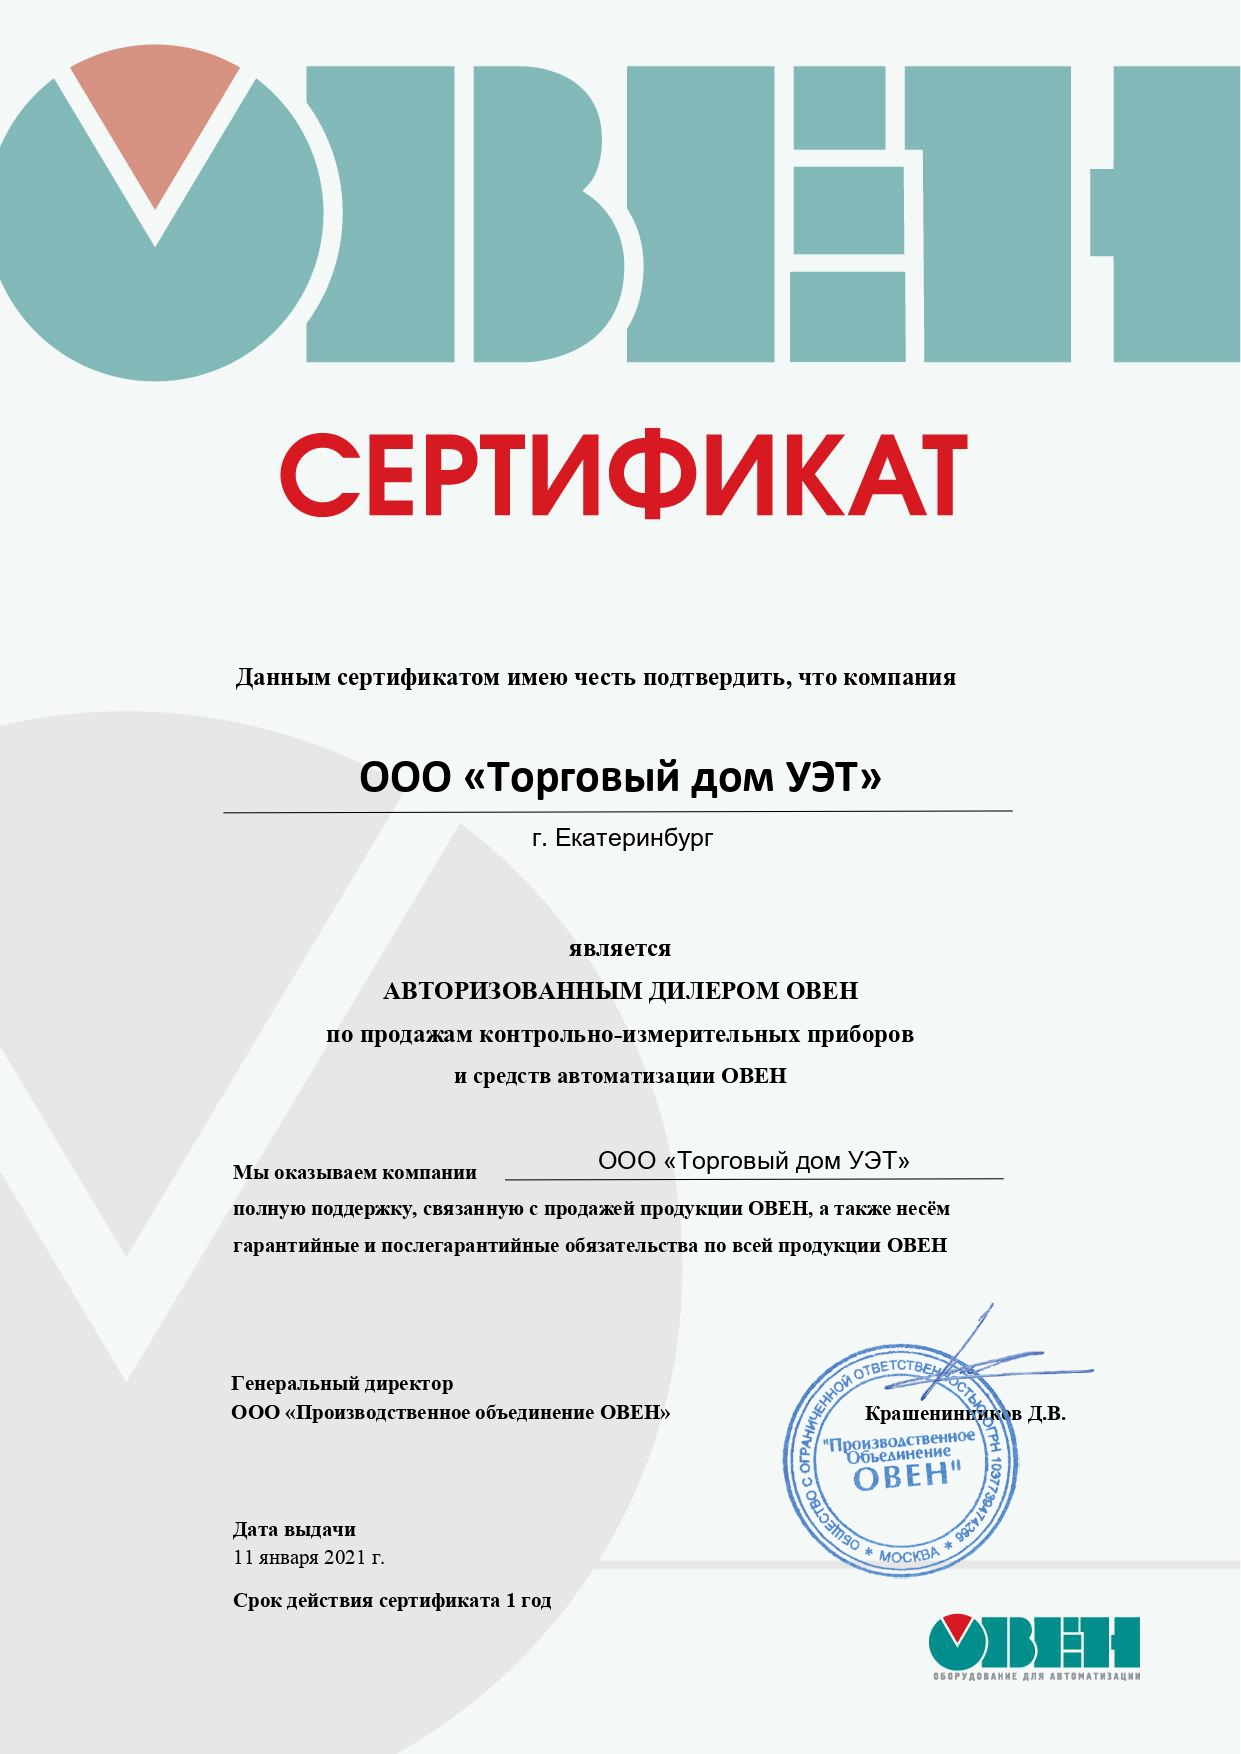 ООО "ТД УЭТ" получил сертификат дилерства компании Овен на 2021г.